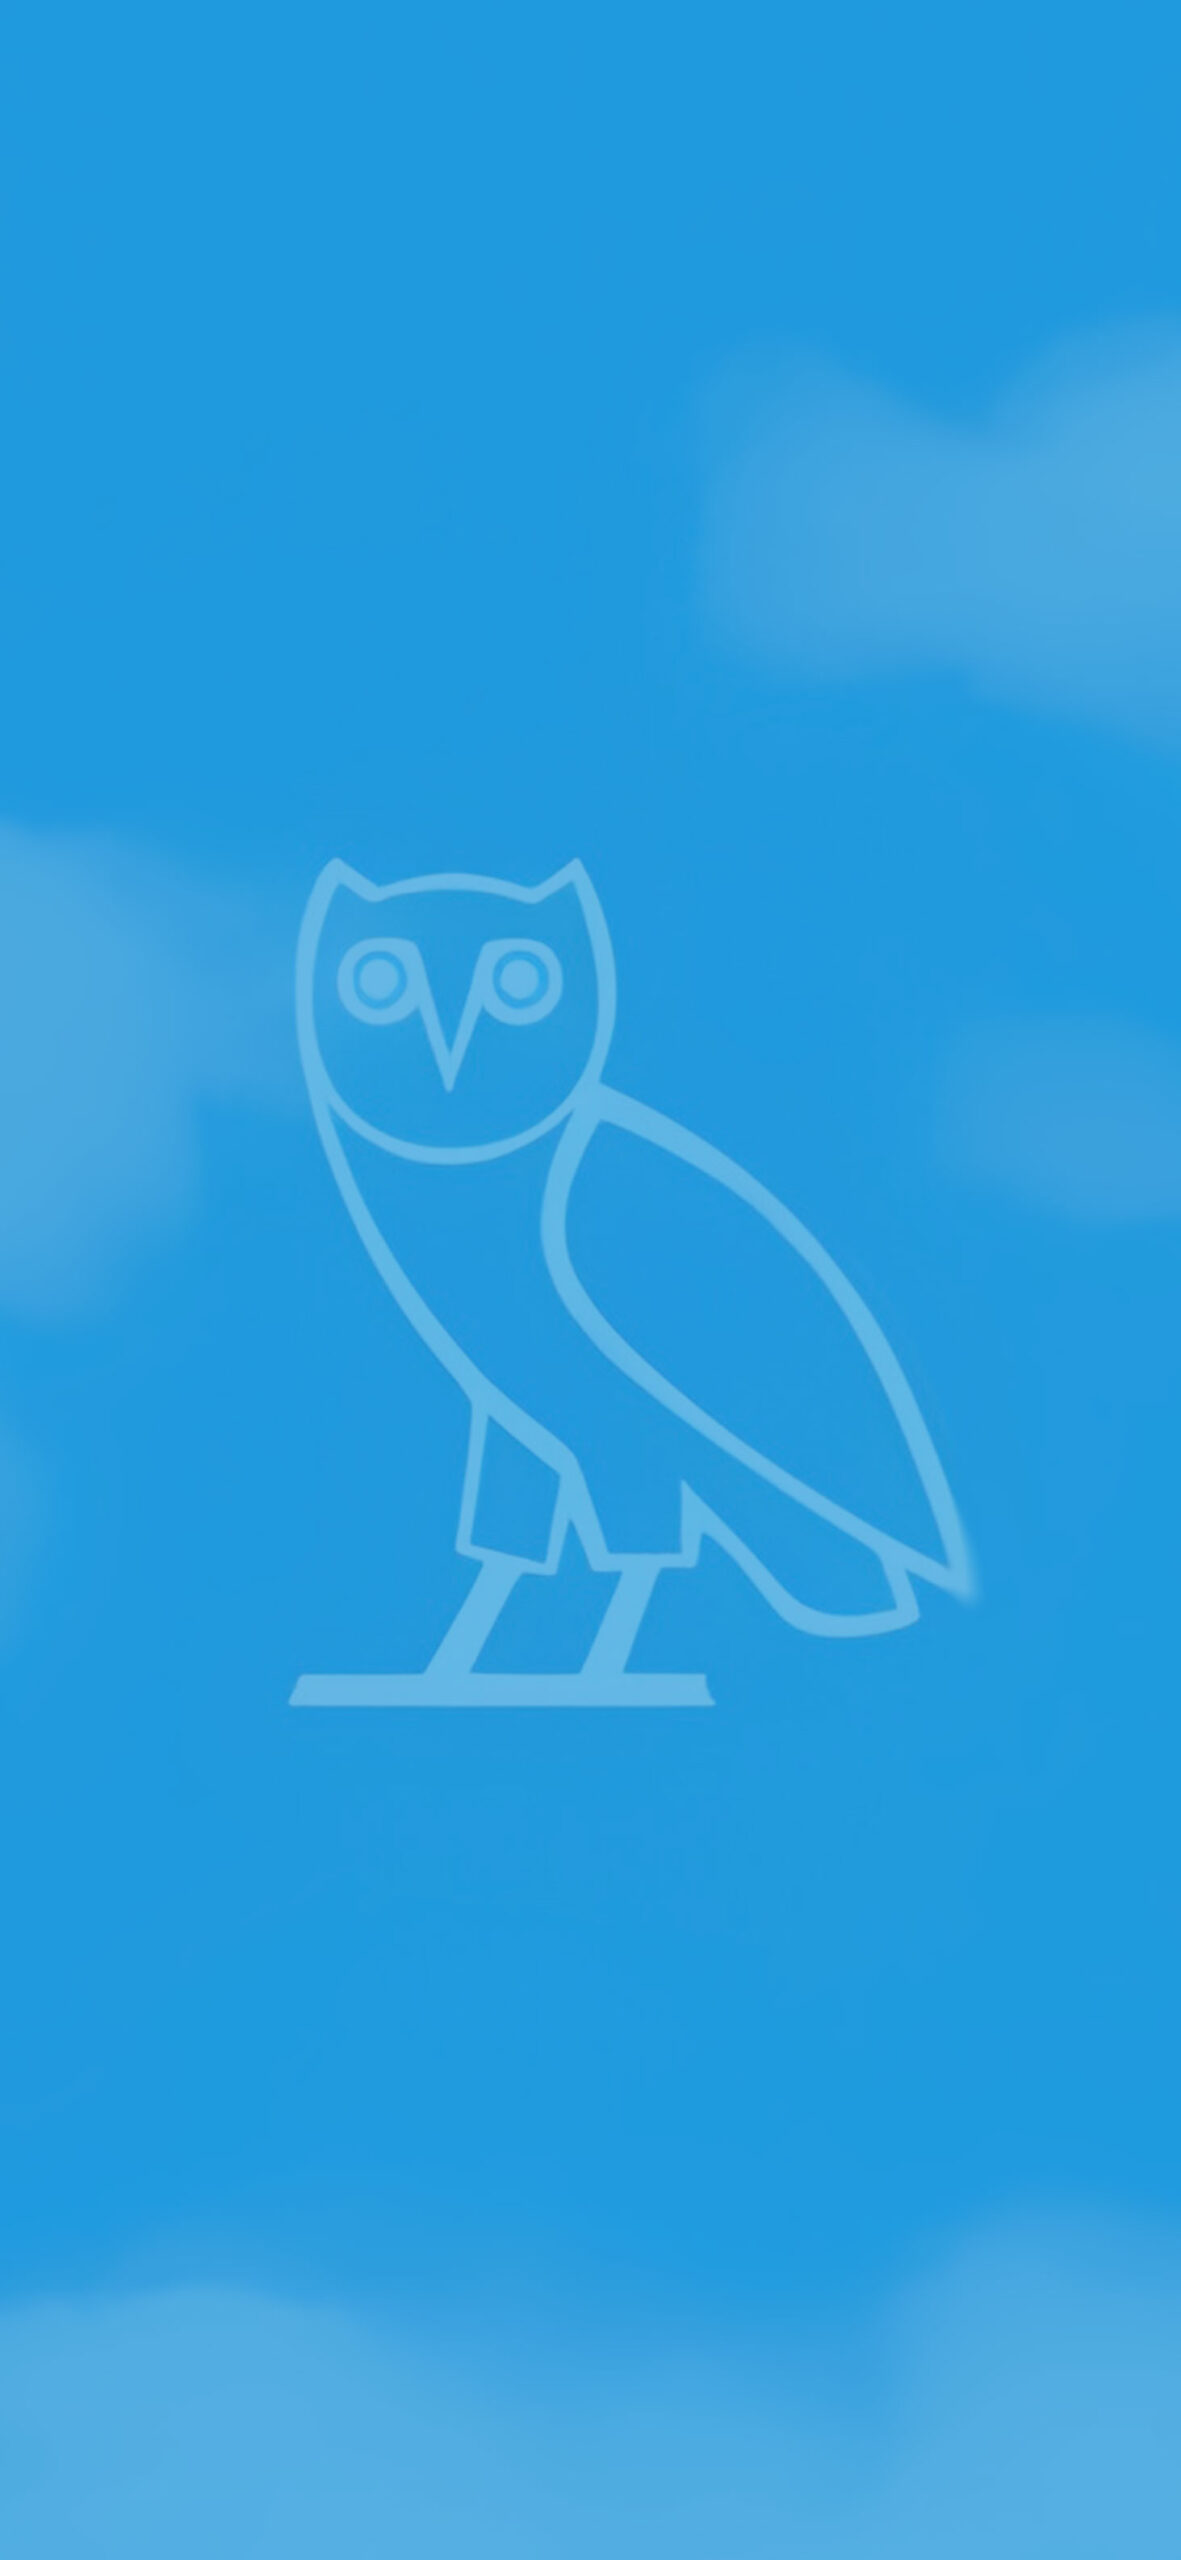 White OVO owl logo sky wallpaper Cool airy aesthetic wallpaper